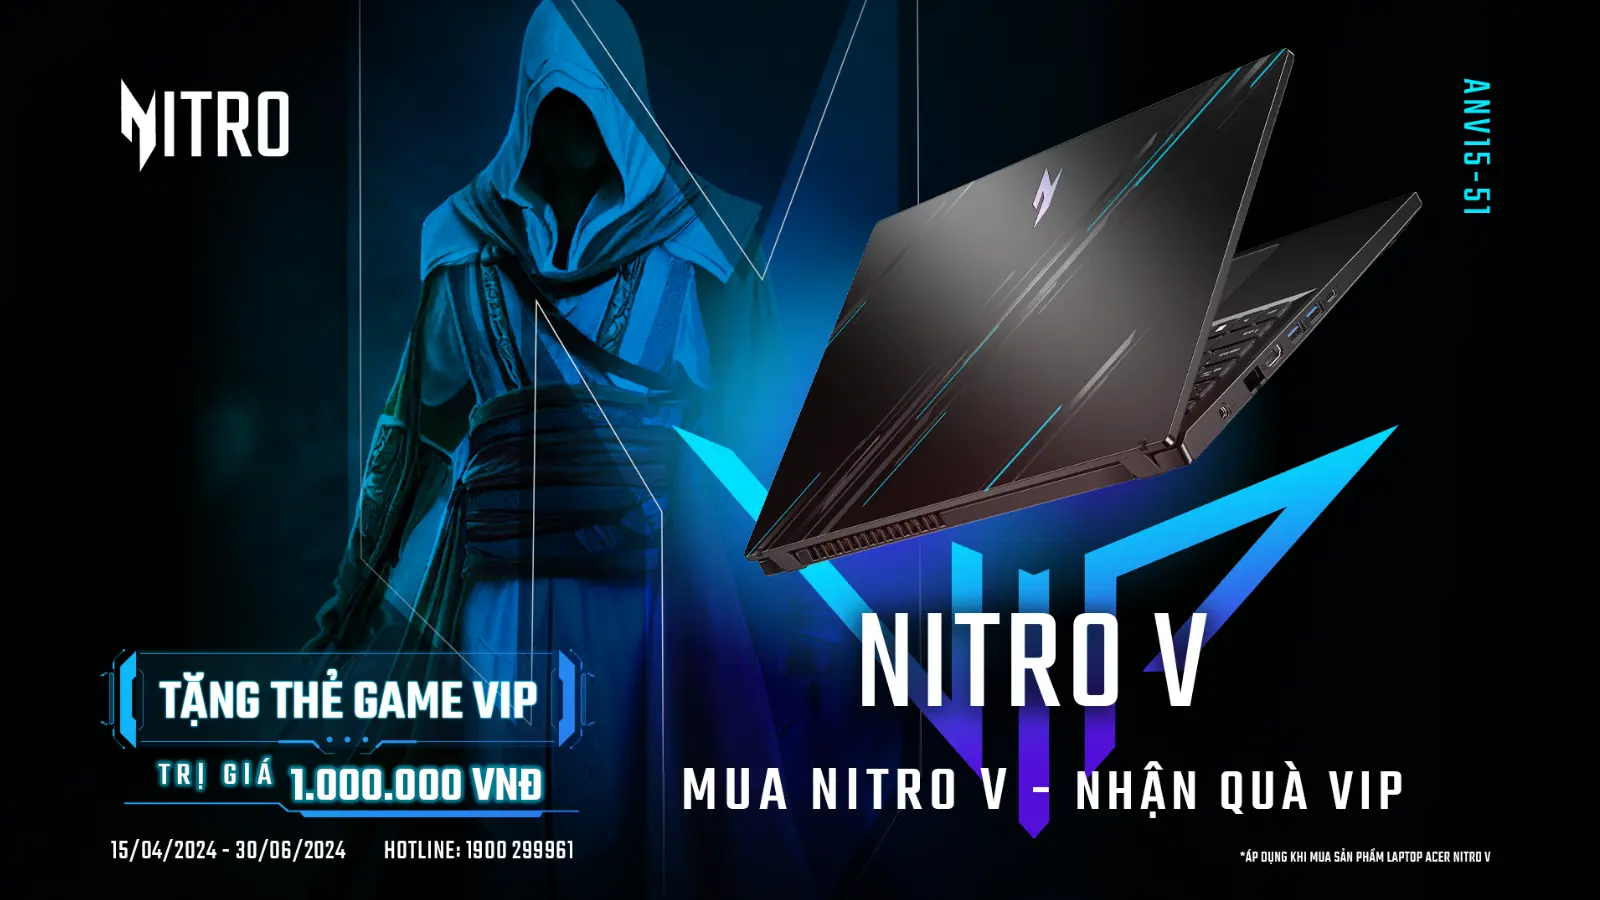 Mua Nitro V Nhận Quà VIP 06.2024 - Acer Việt Nam - 1600x900